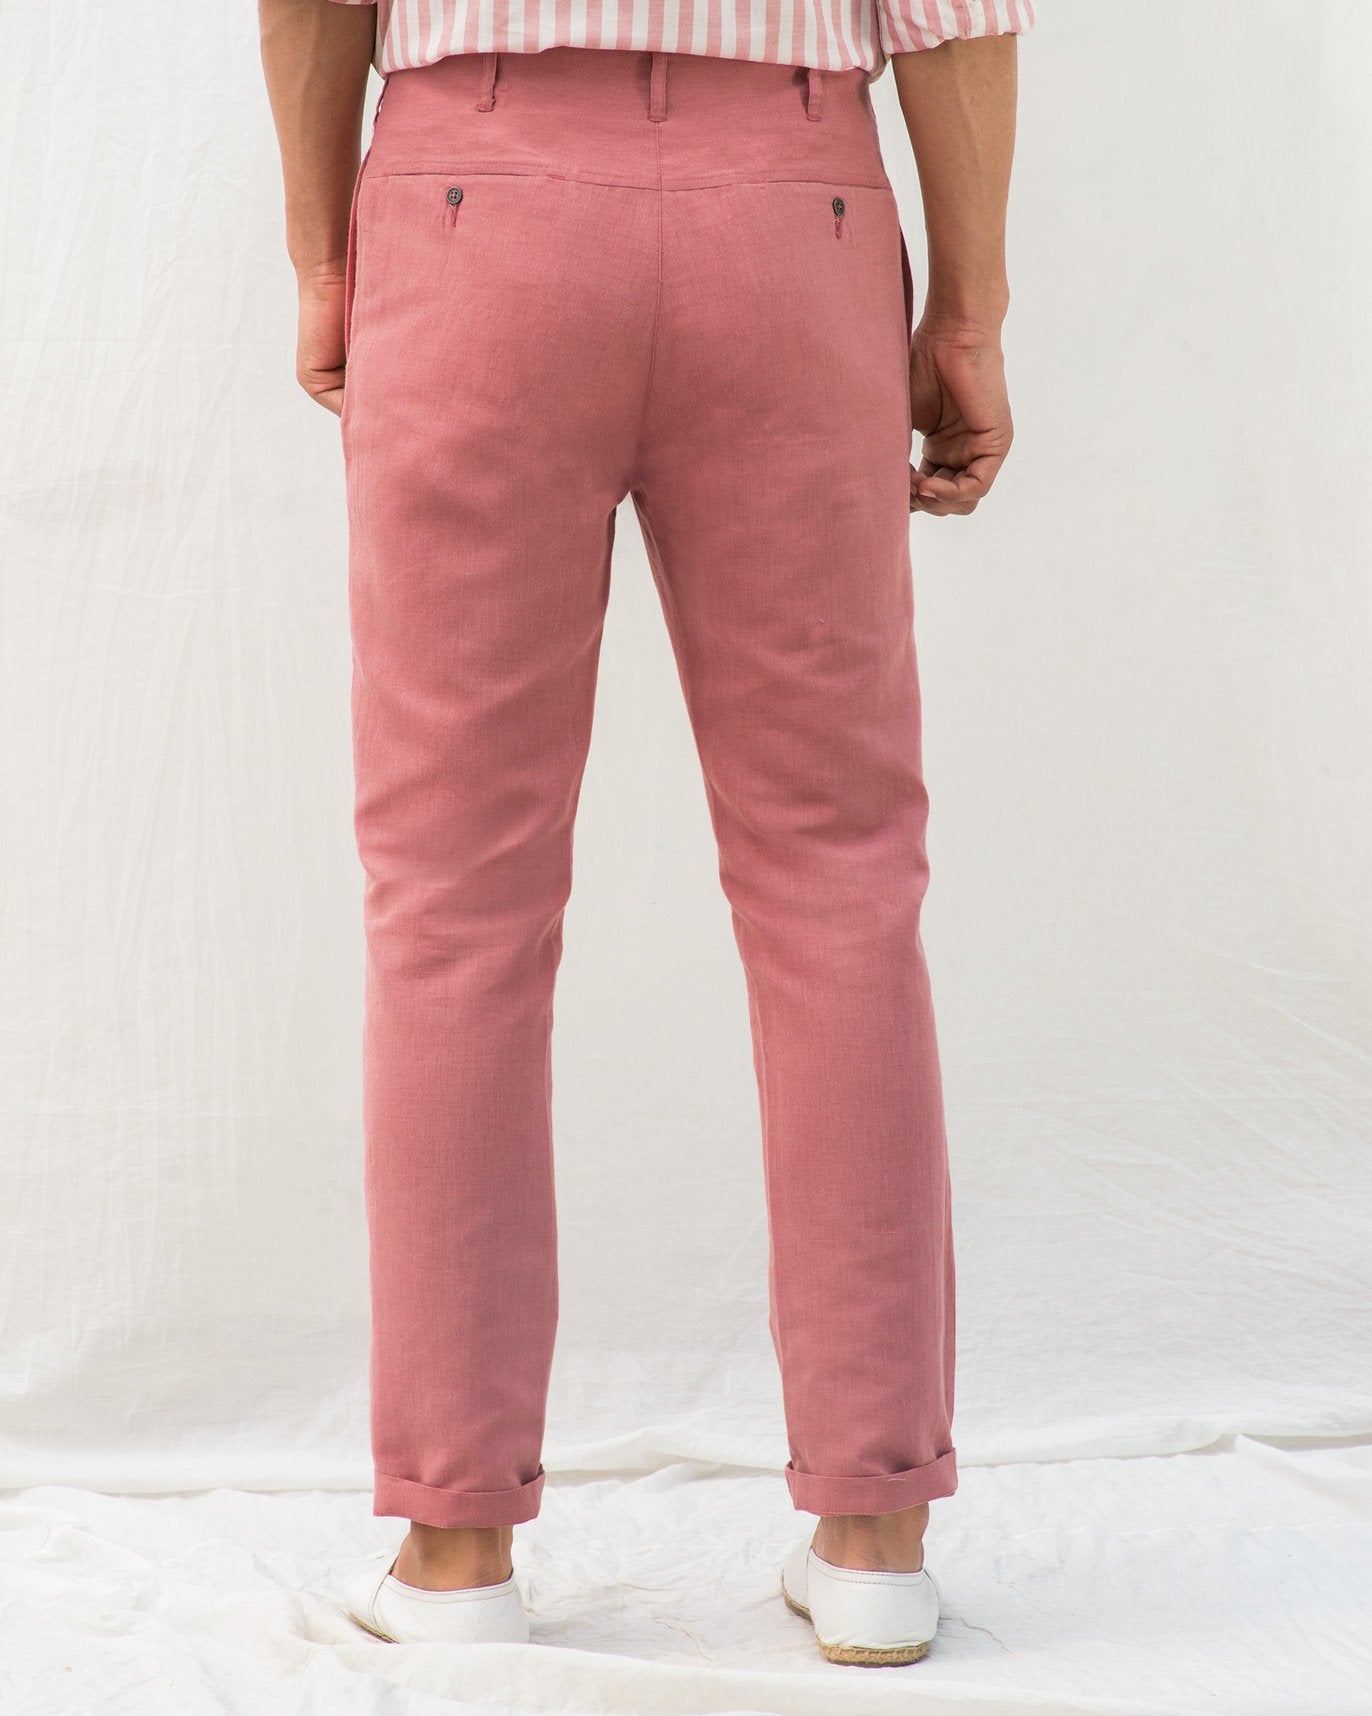 Vintage Trousers - Pink